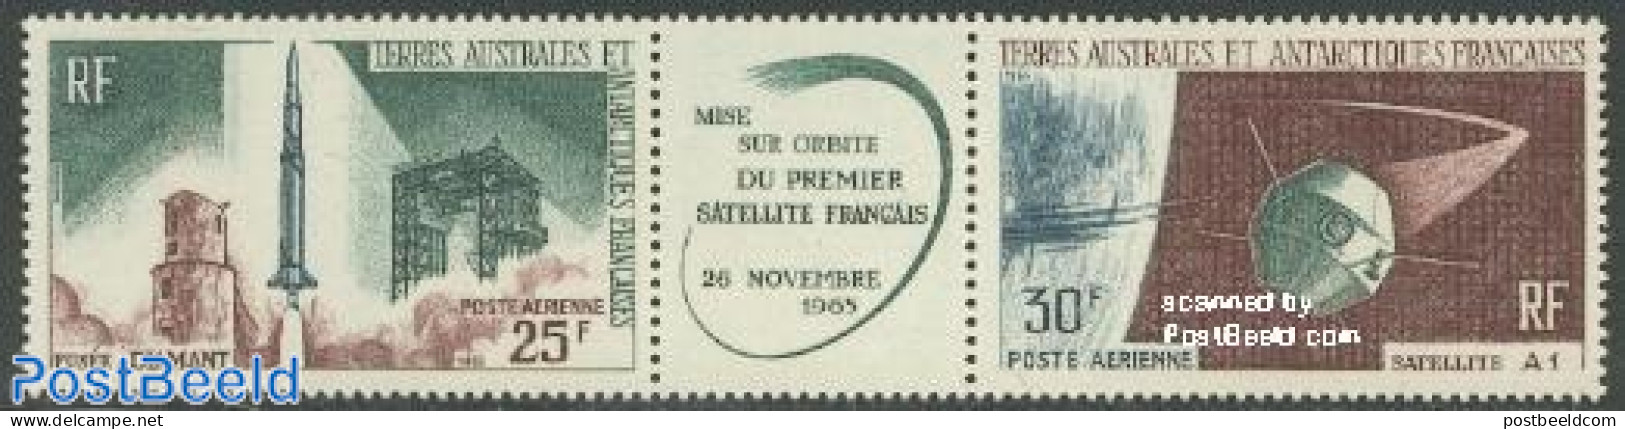 French Antarctic Territory 1966 Satellites 2v+tab [:T:], Unused (hinged), Transport - Various - Space Exploration - Jo.. - Unused Stamps